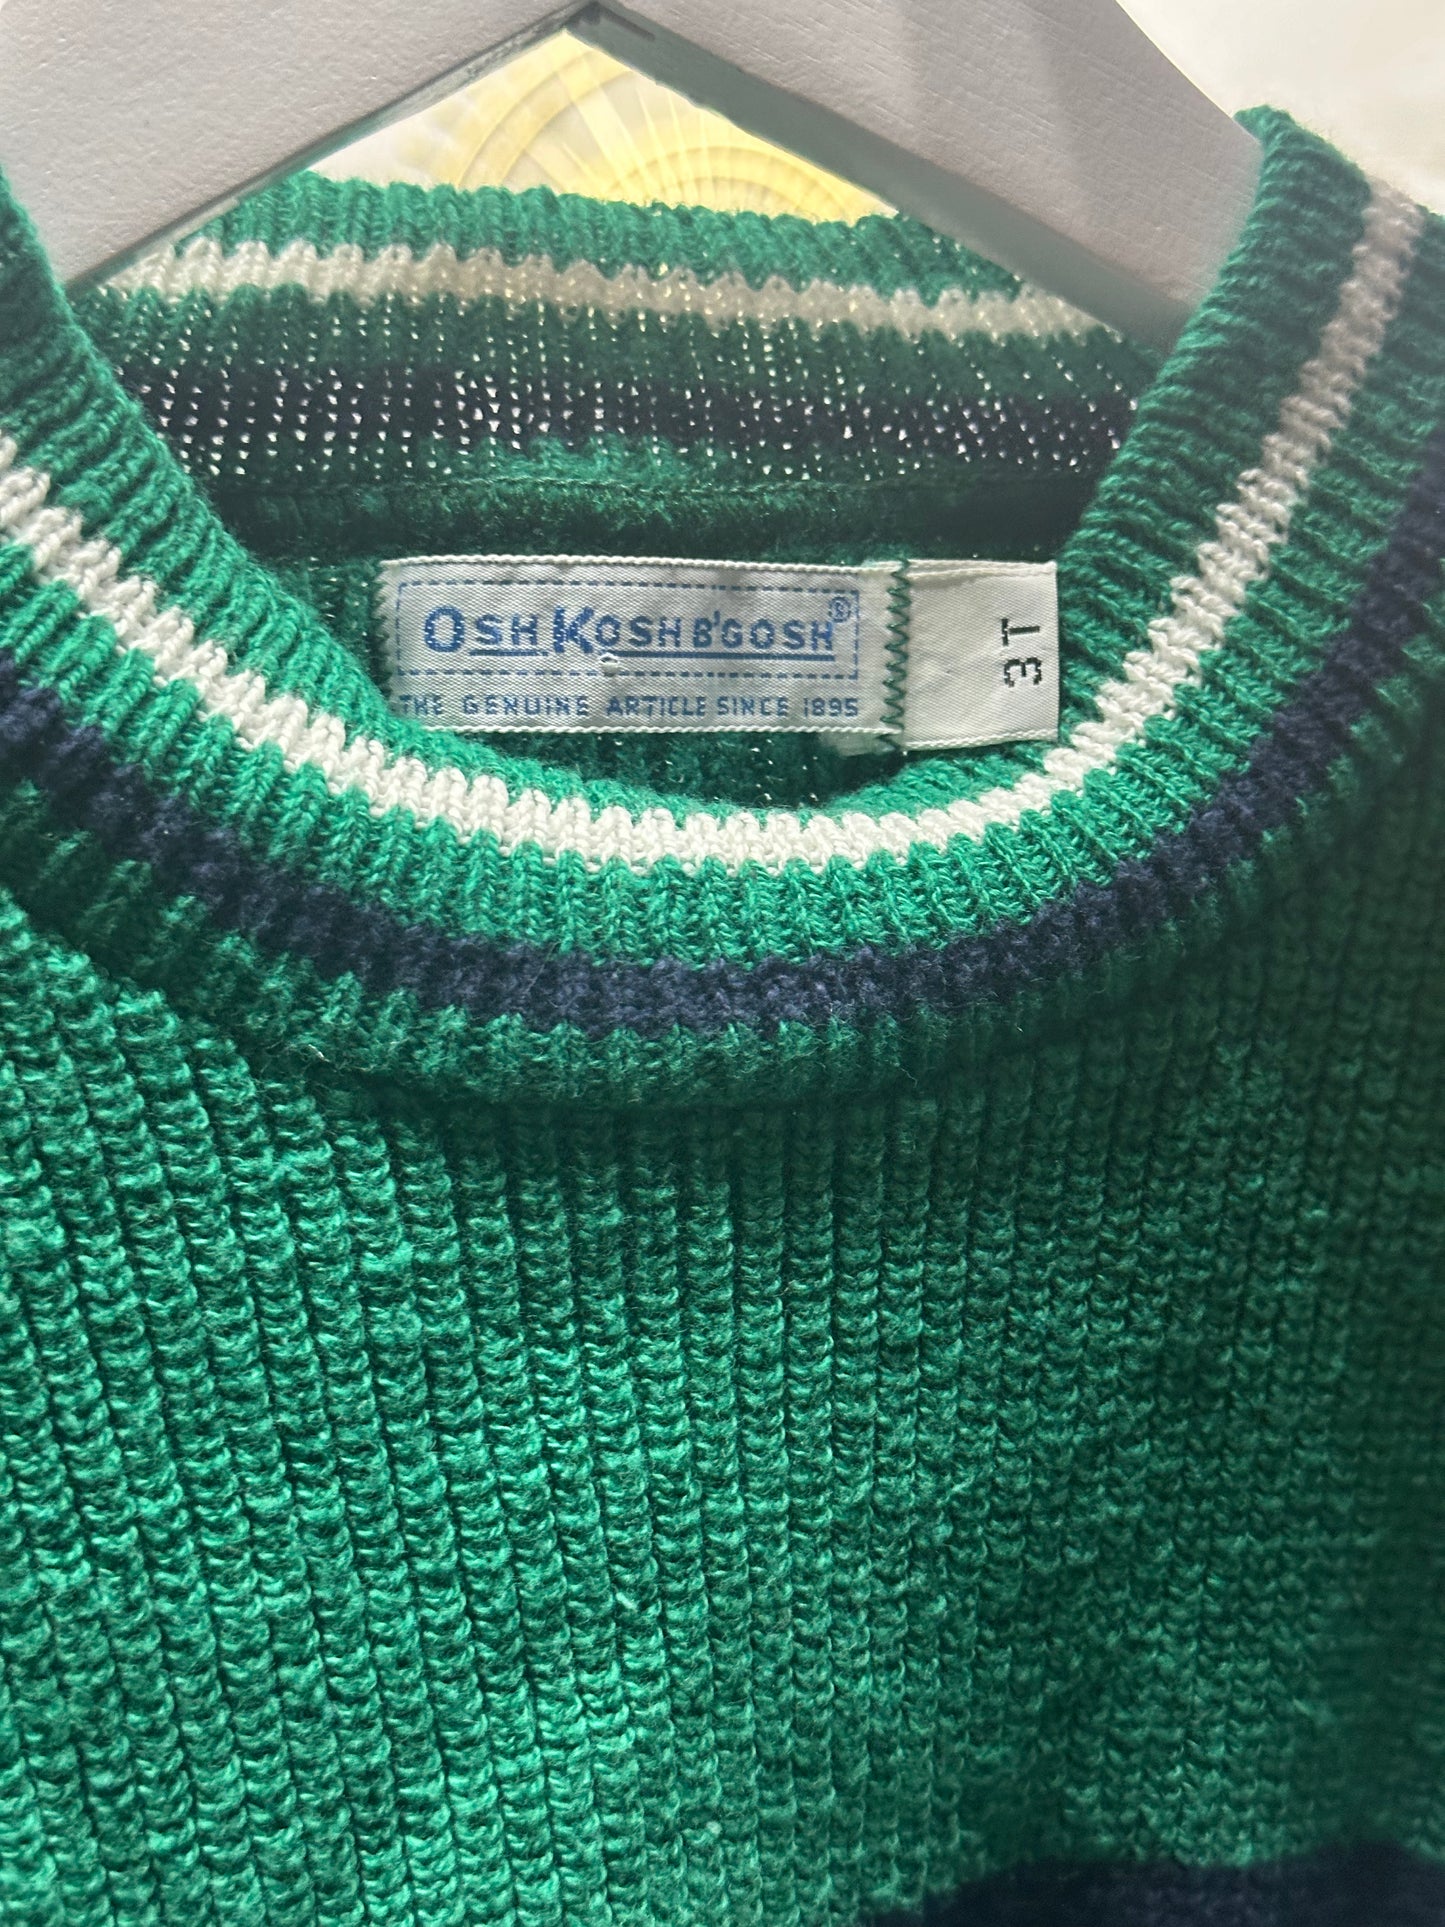 Boys Size 3t Osh Kosh B'Gosh Vintage Sweater - Good Used Condition